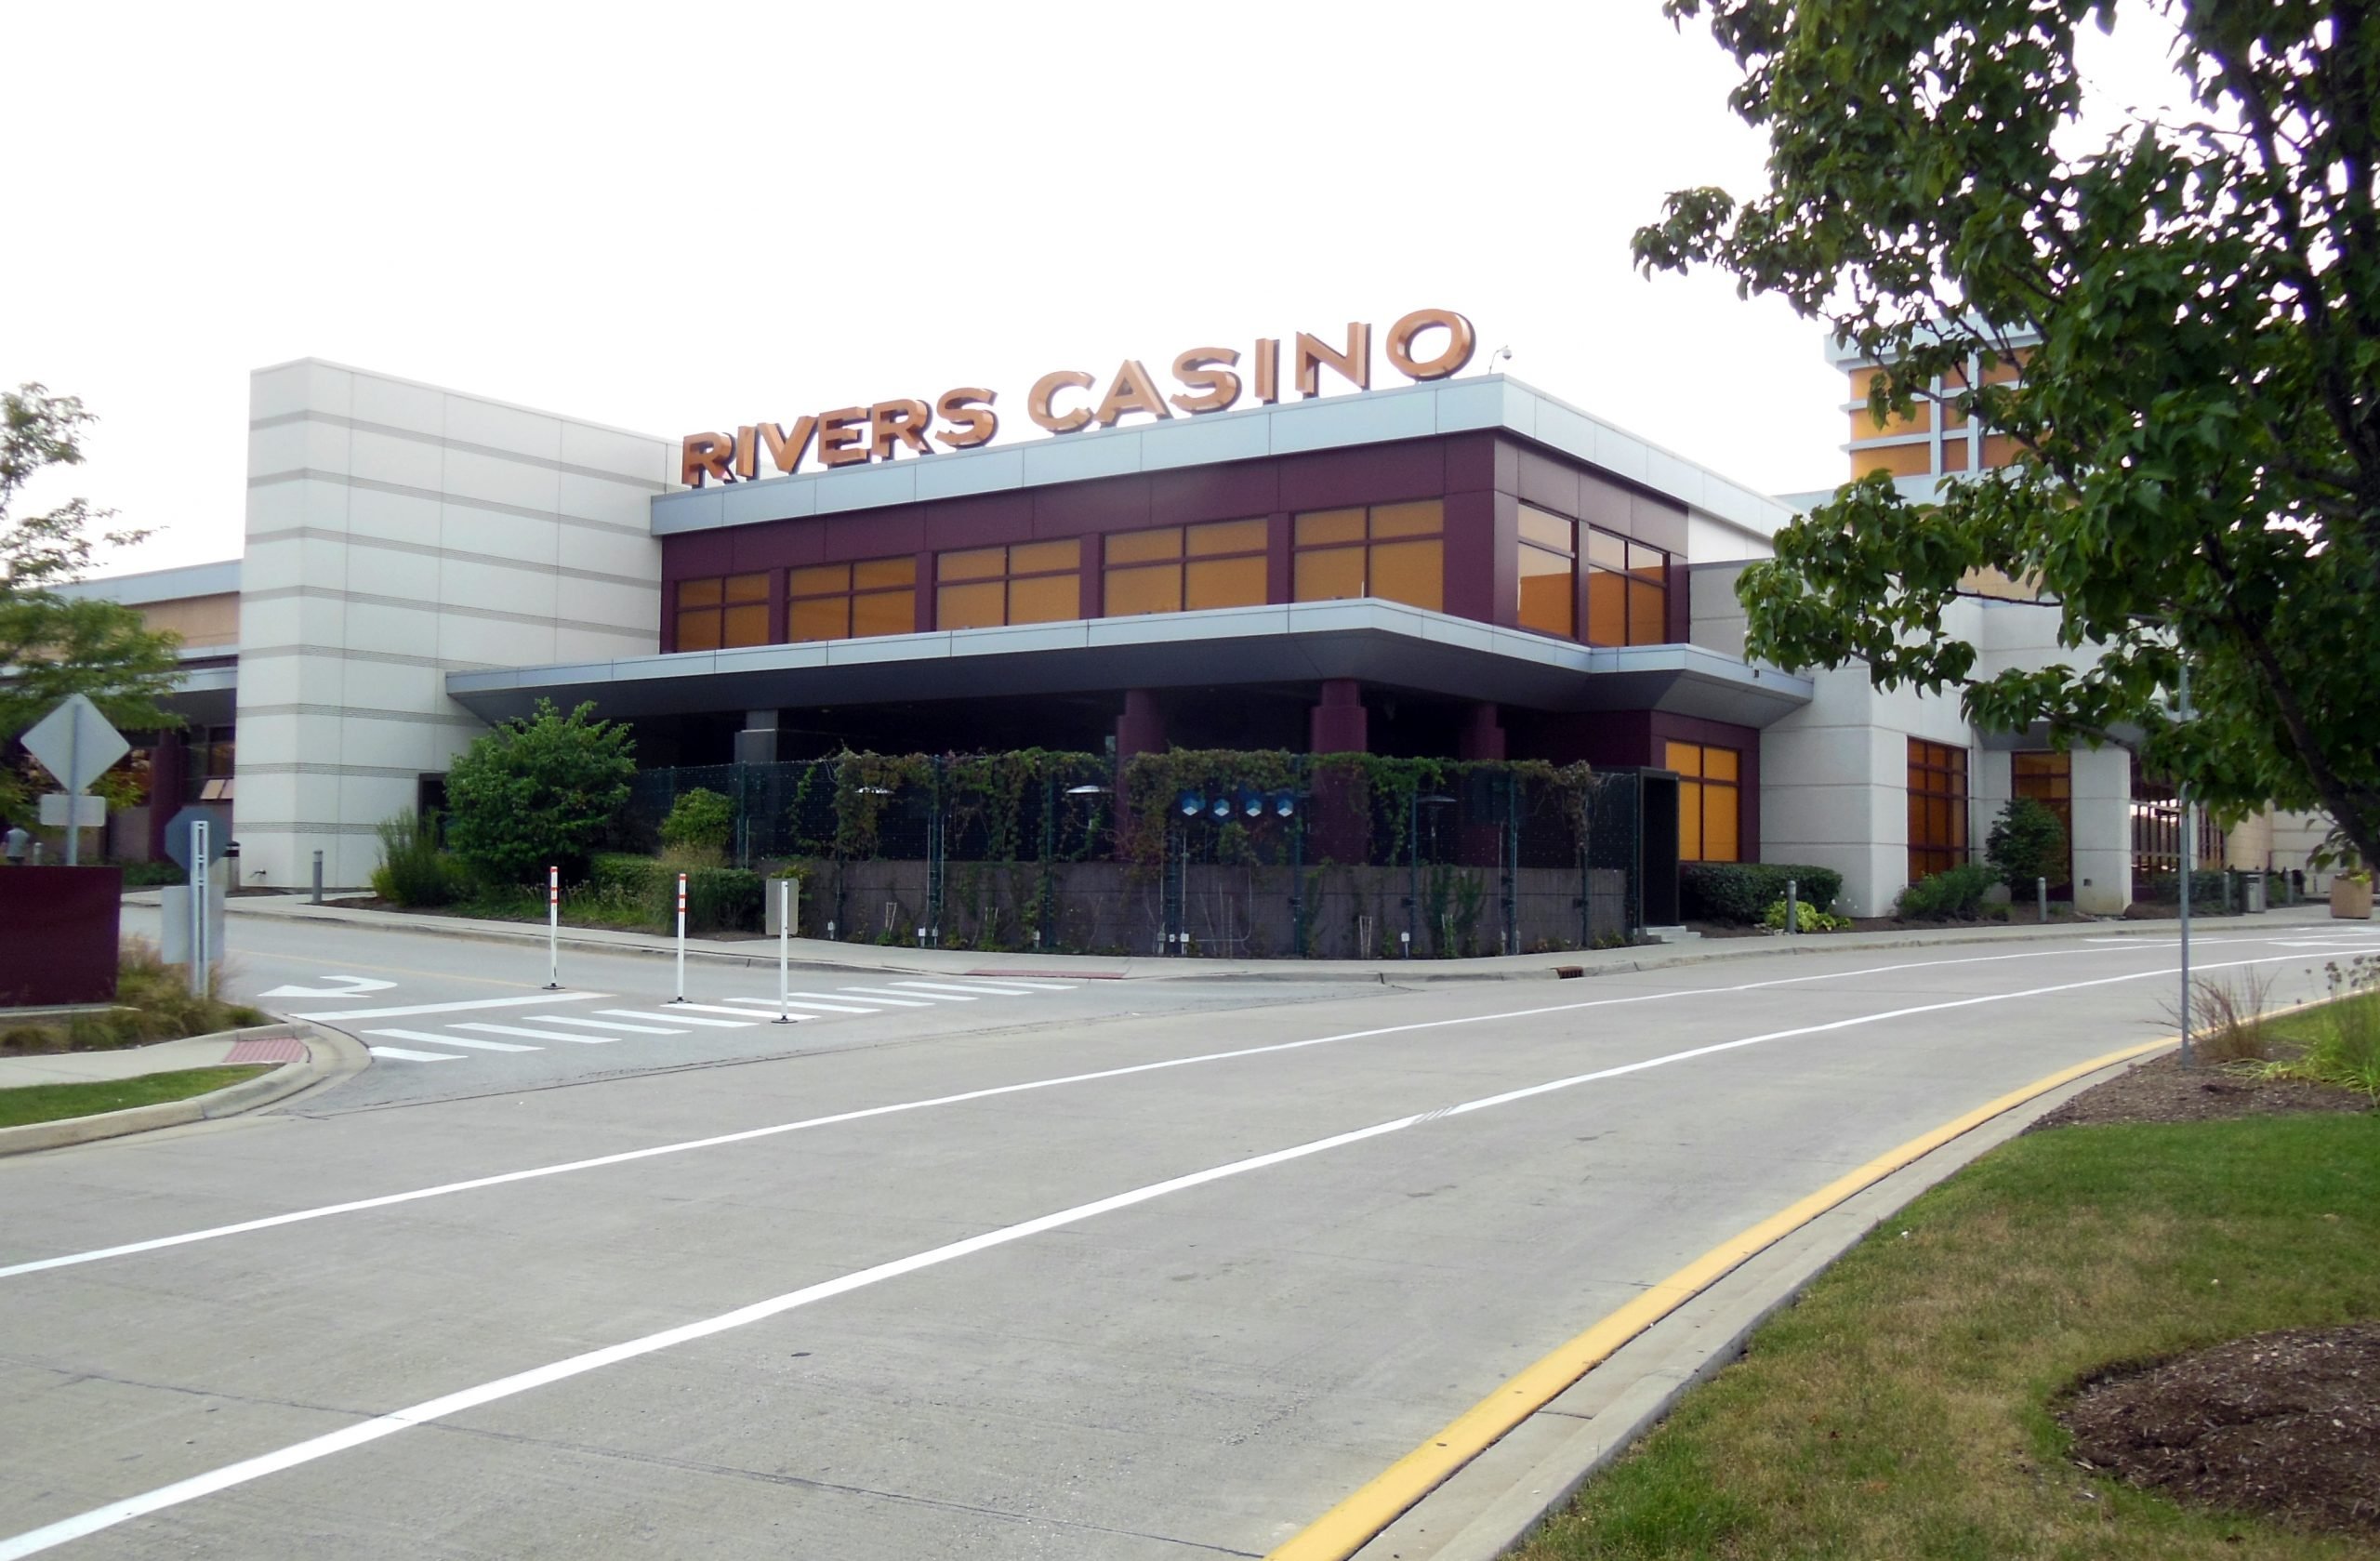 rivers casino chicago win loss statement